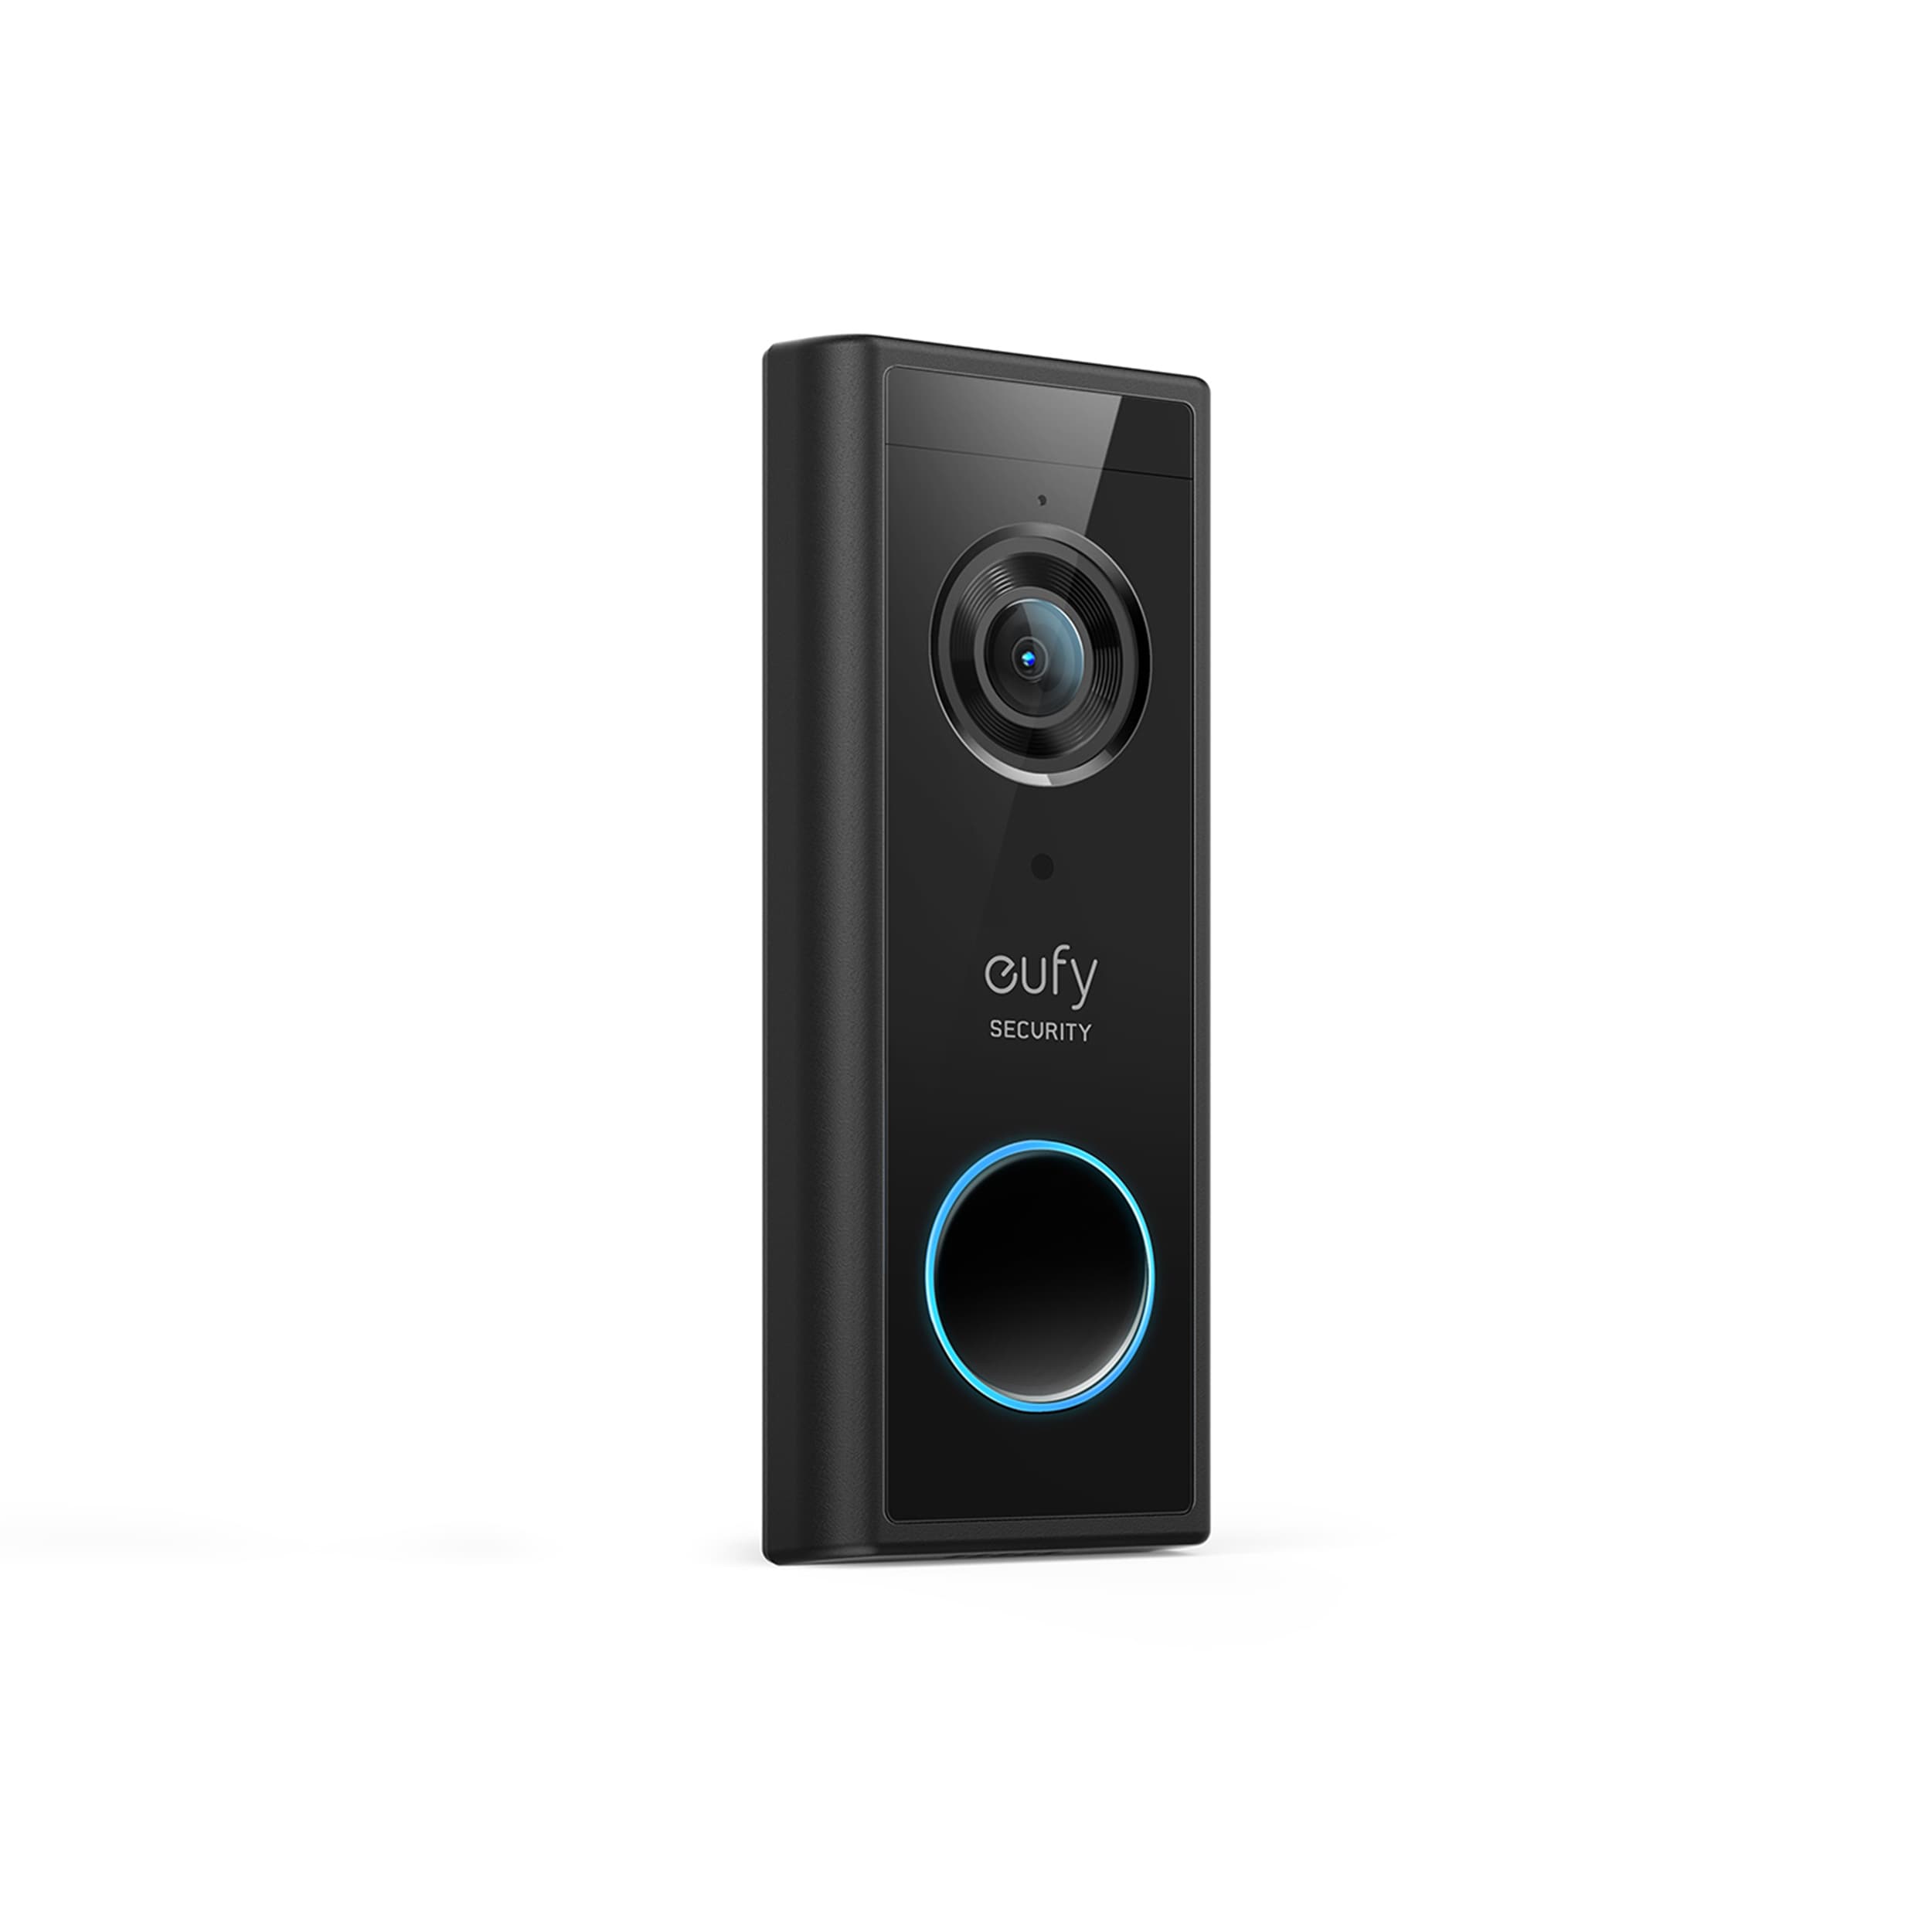 Eufy Video Doorbell 2K with Homebase Video Türklingel Wetterfest 2K Sensor 